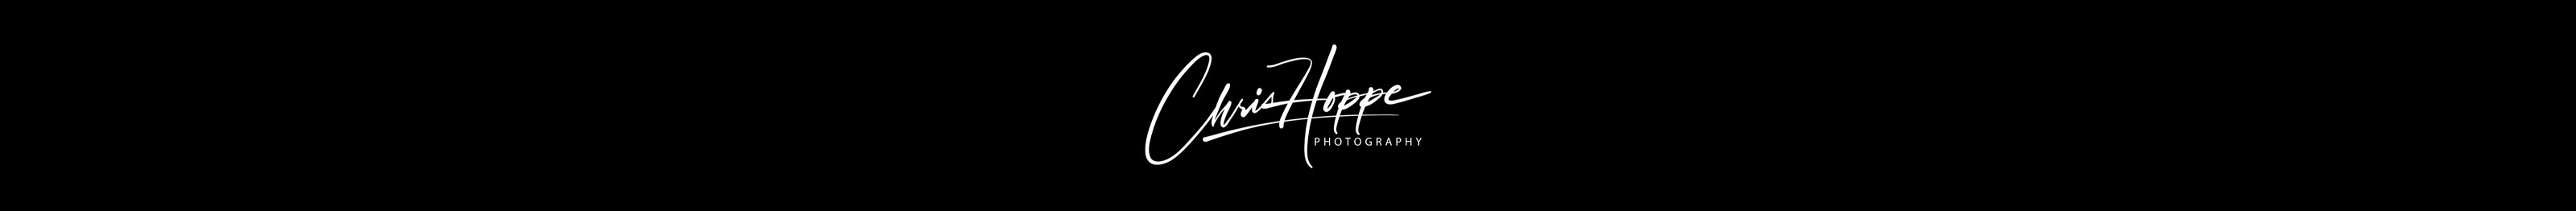 Chris Hoppe profil başlığı